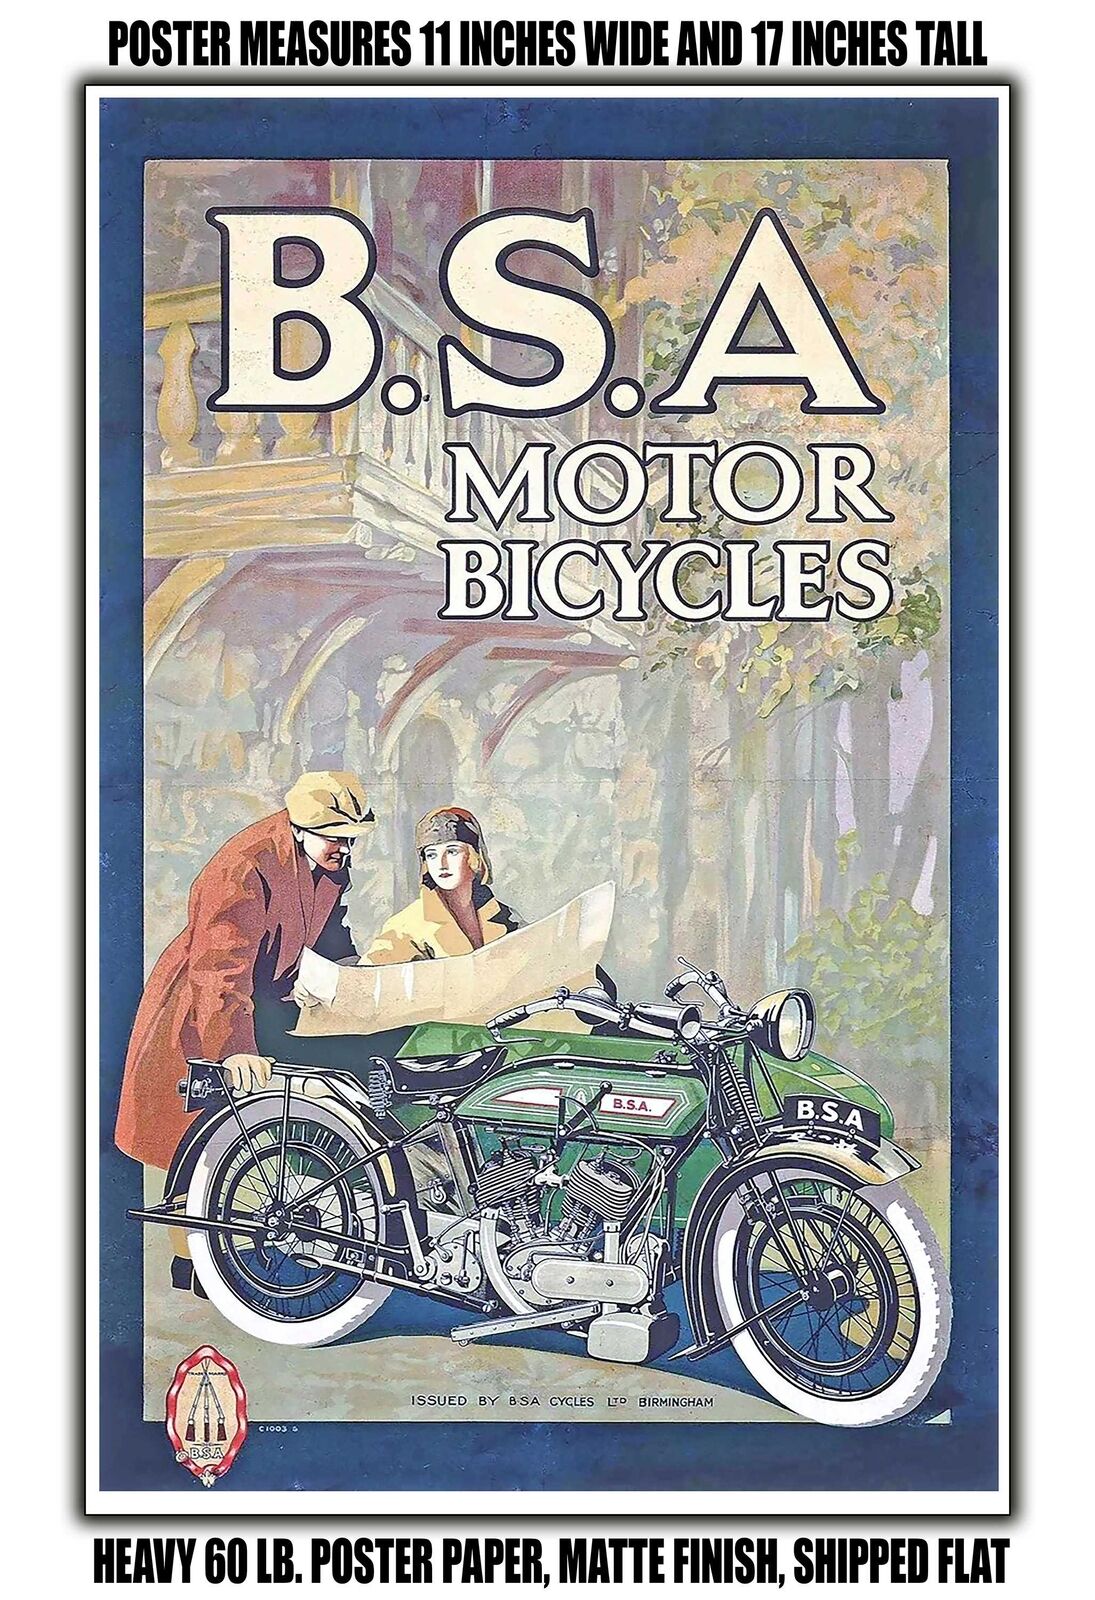 11x17 POSTER - 1926 BSA Motor Bicycles